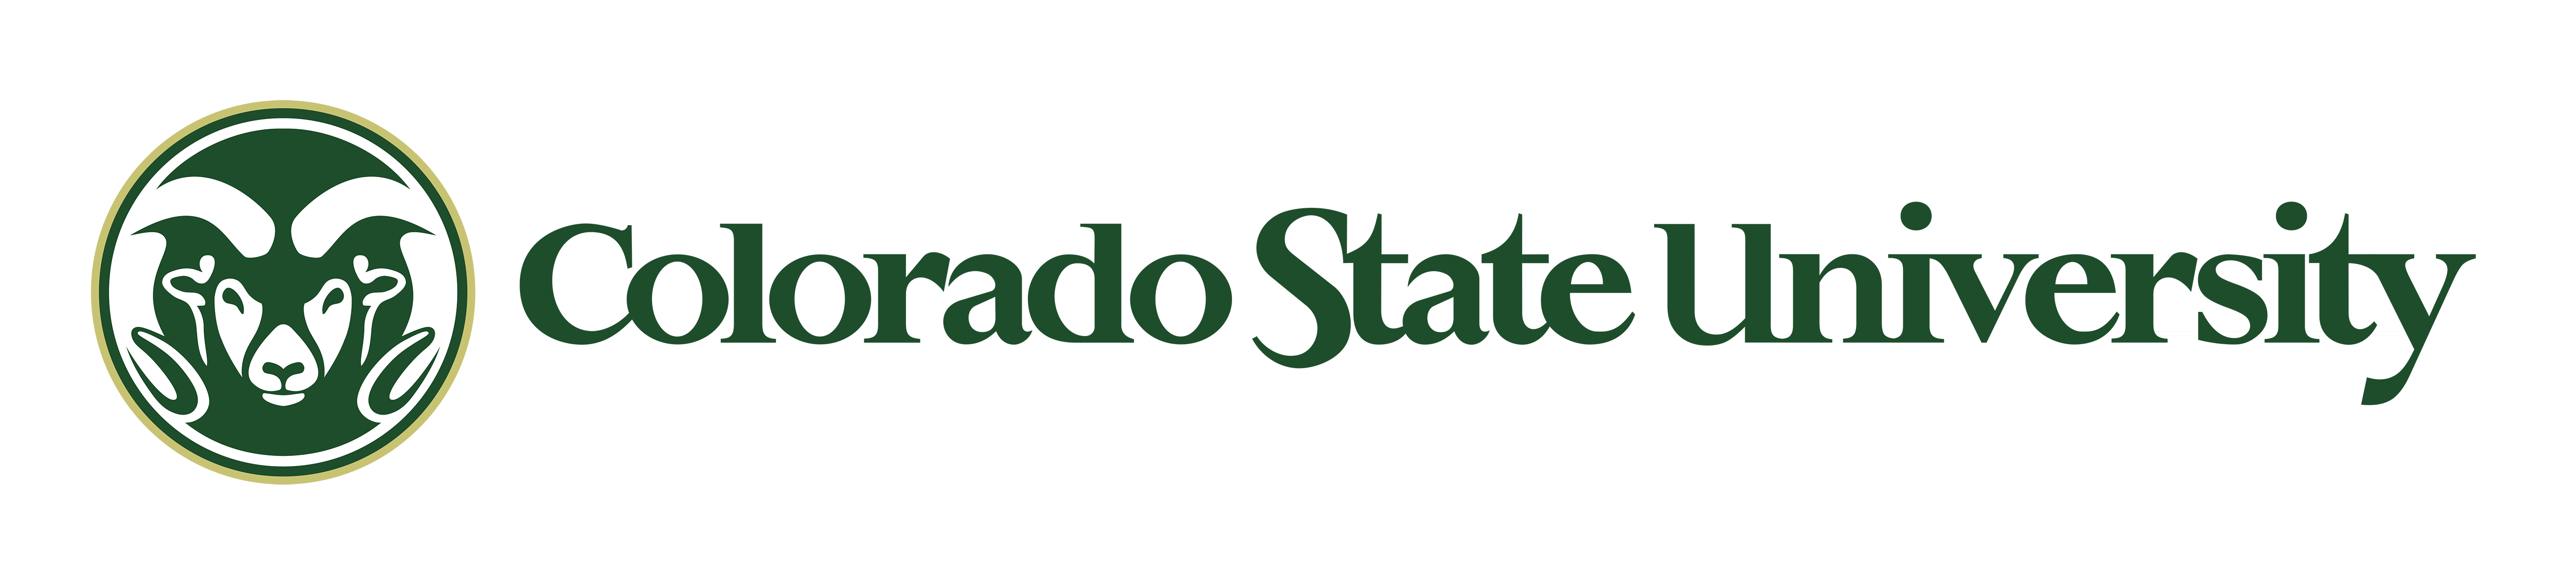 Logo for Colorado State University